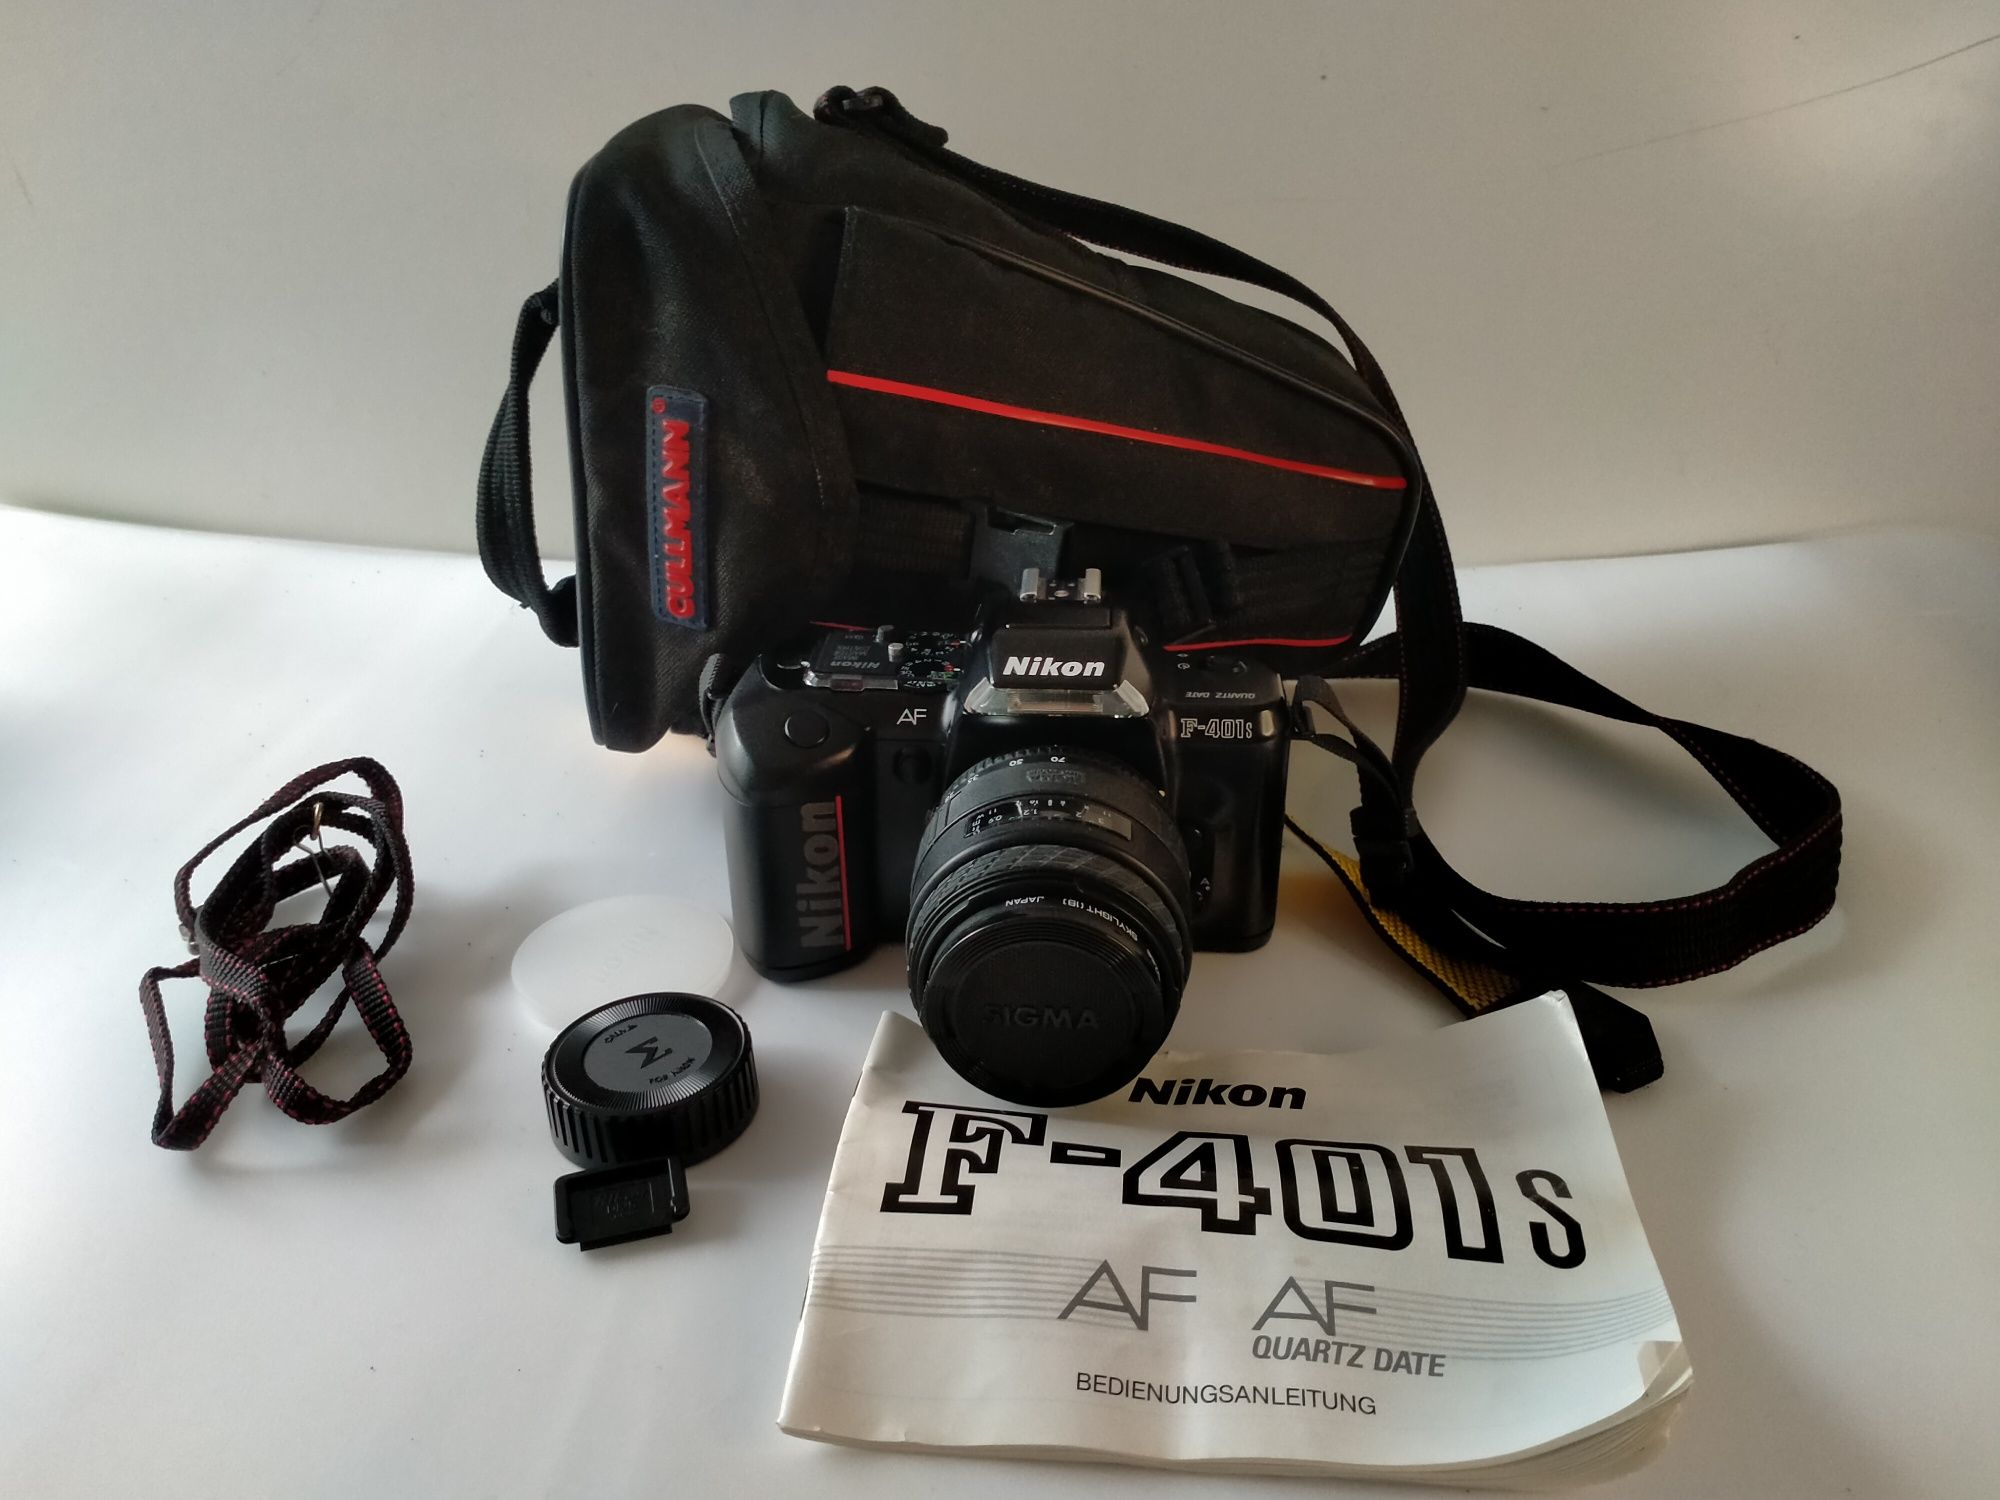 Aparat fotograficzny Nikon F-401s